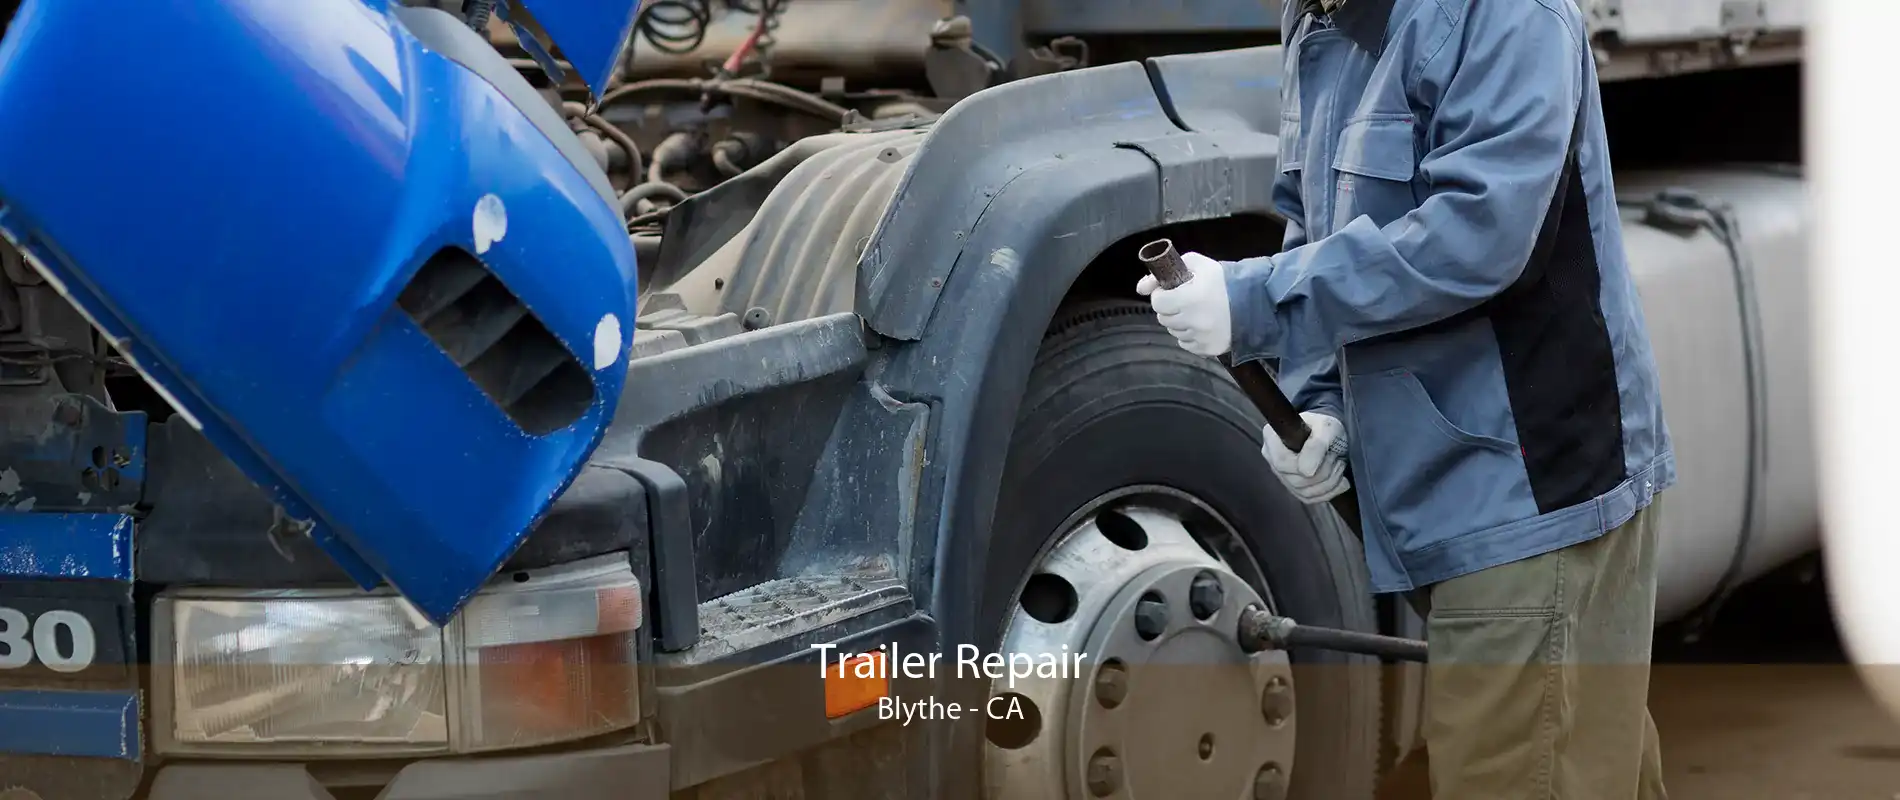 Trailer Repair Blythe - CA